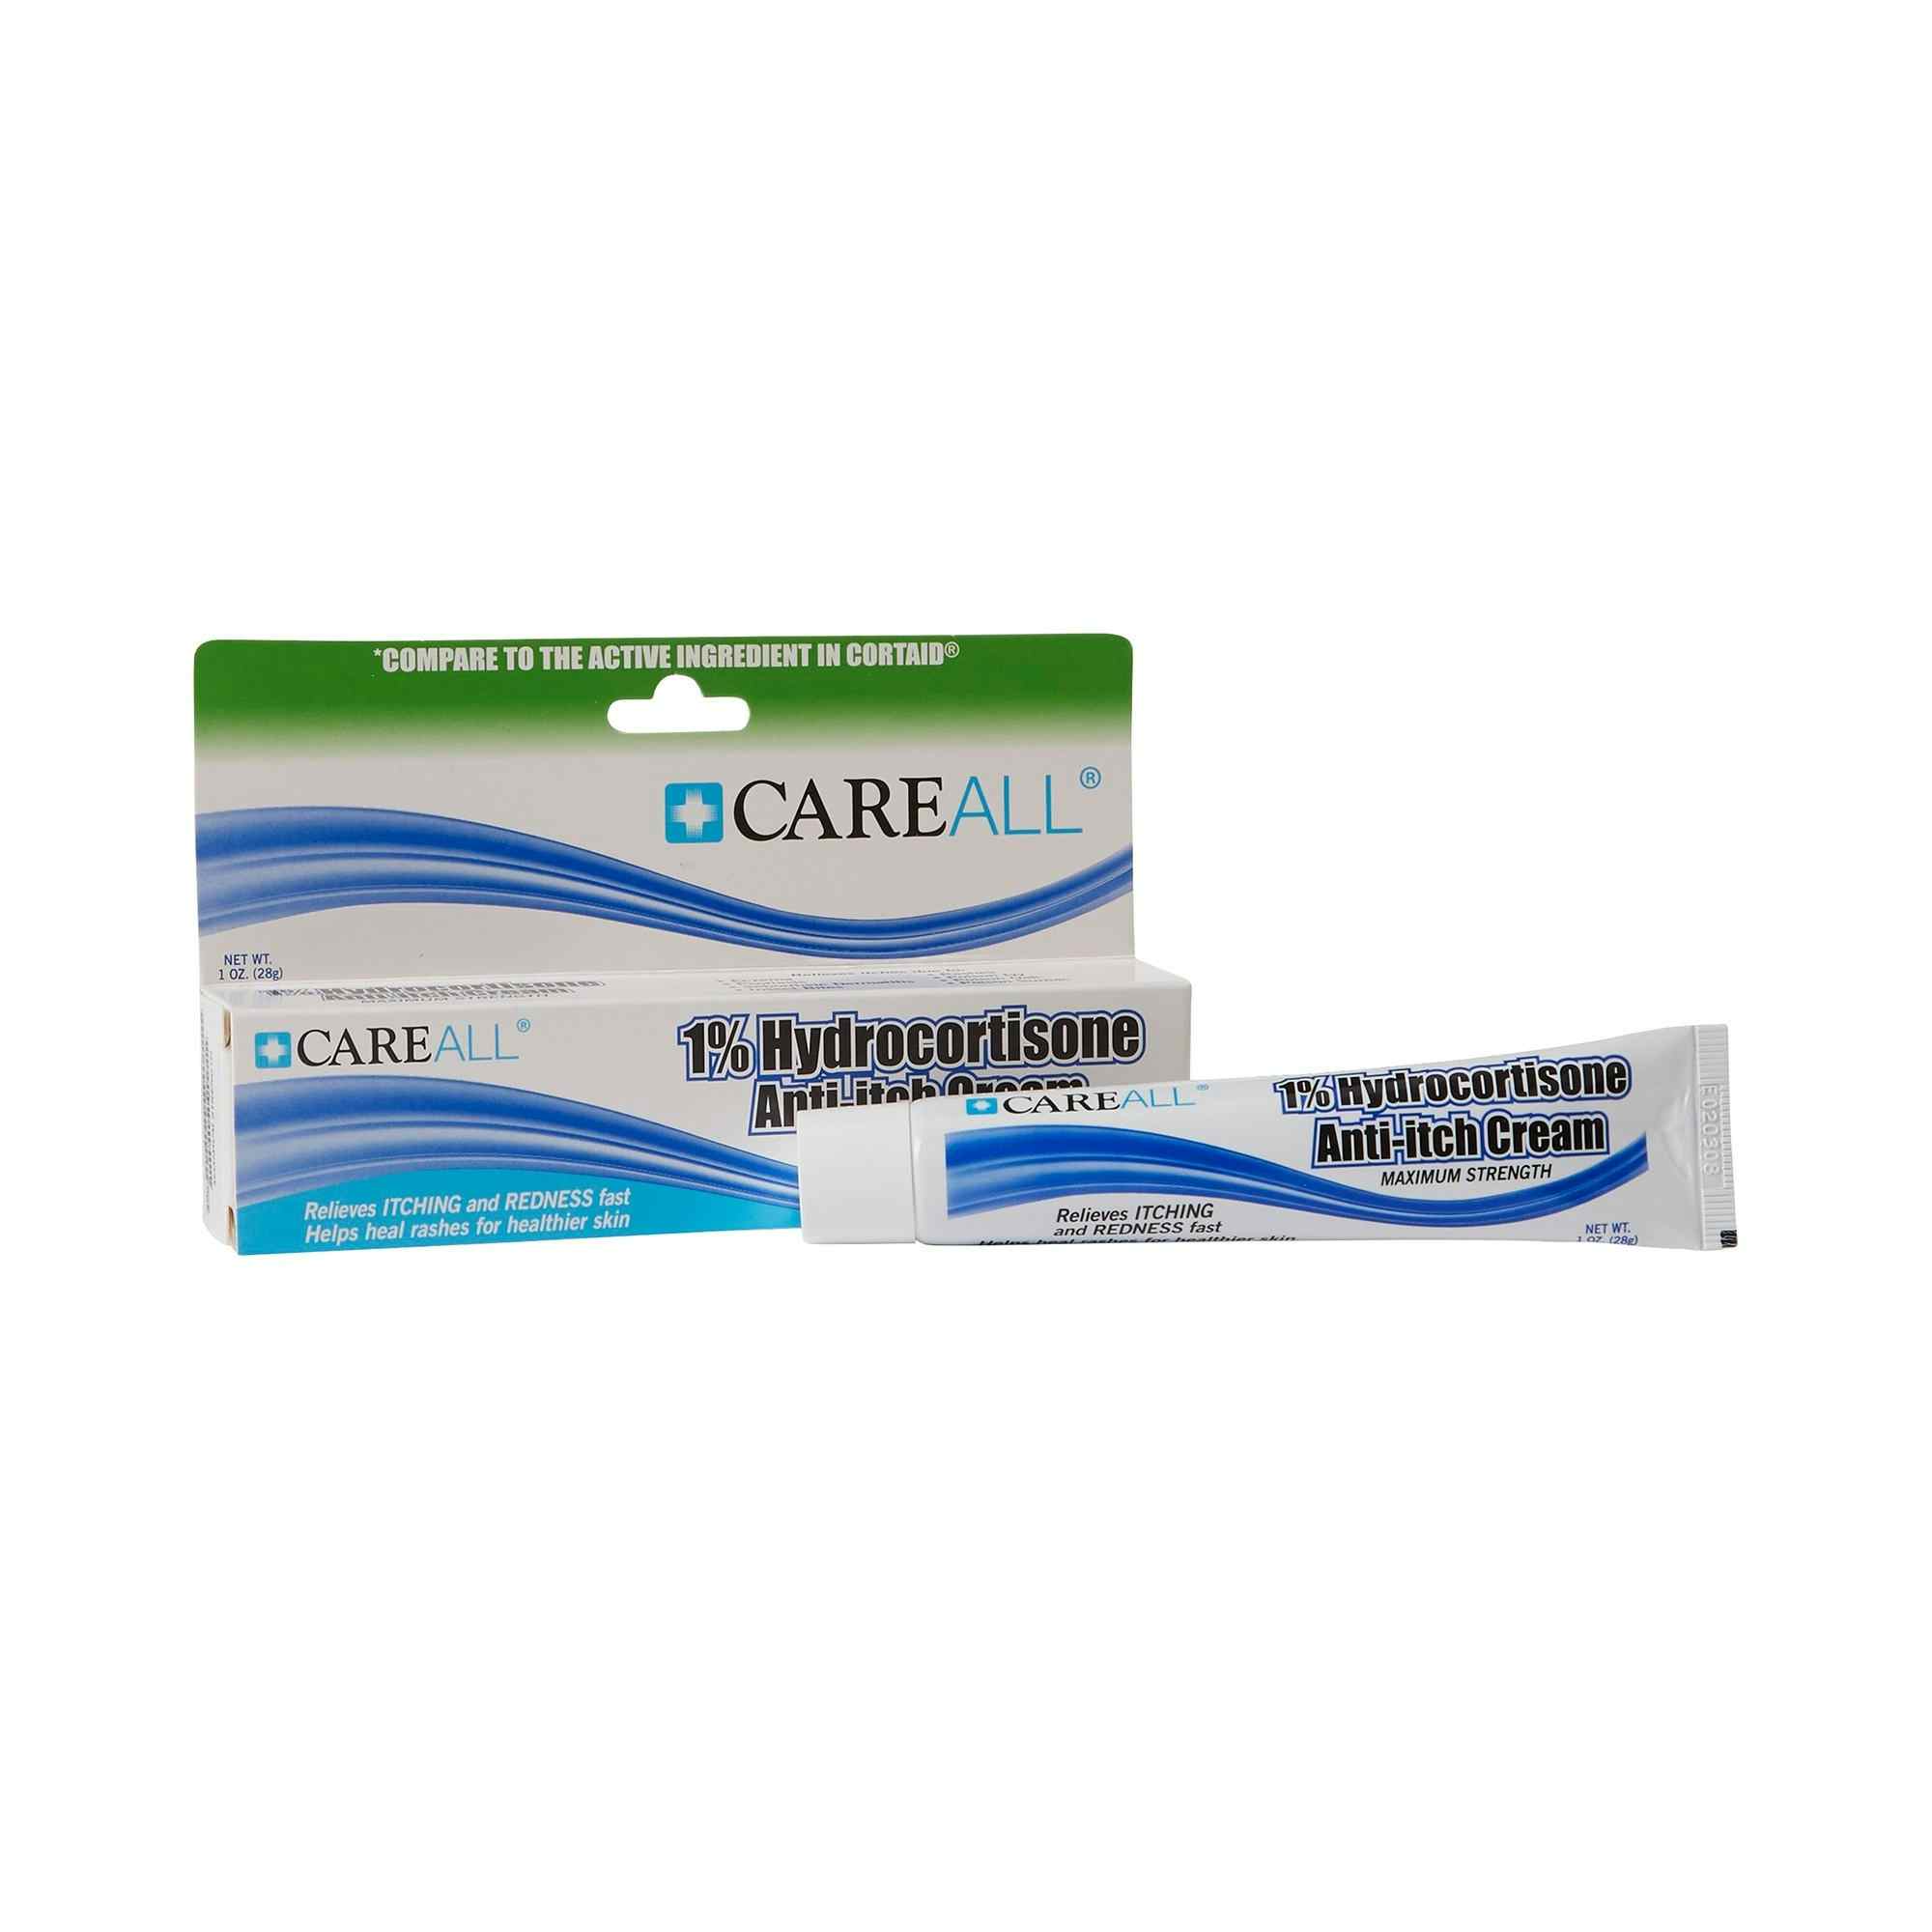 CareAll Maxium Strength 1% Hydrocortisone Anti-Itch Cream